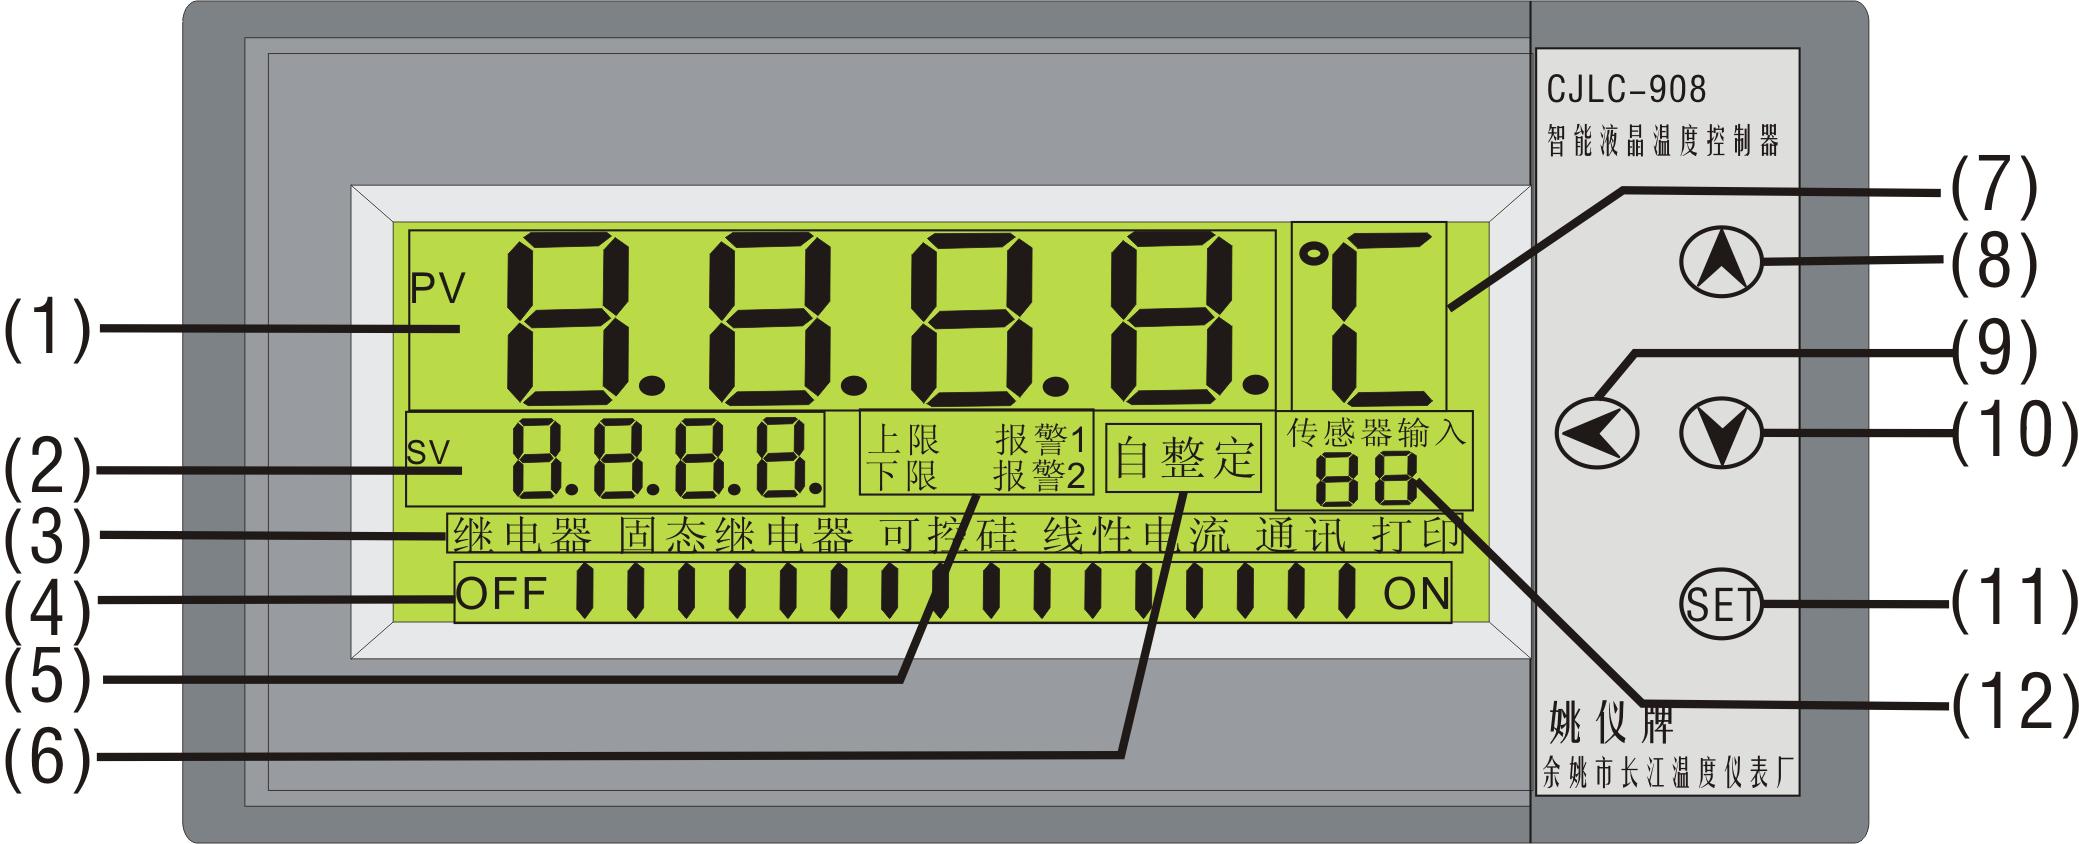 CJLC908系列智能温度控制仪表使用说明书.jpg